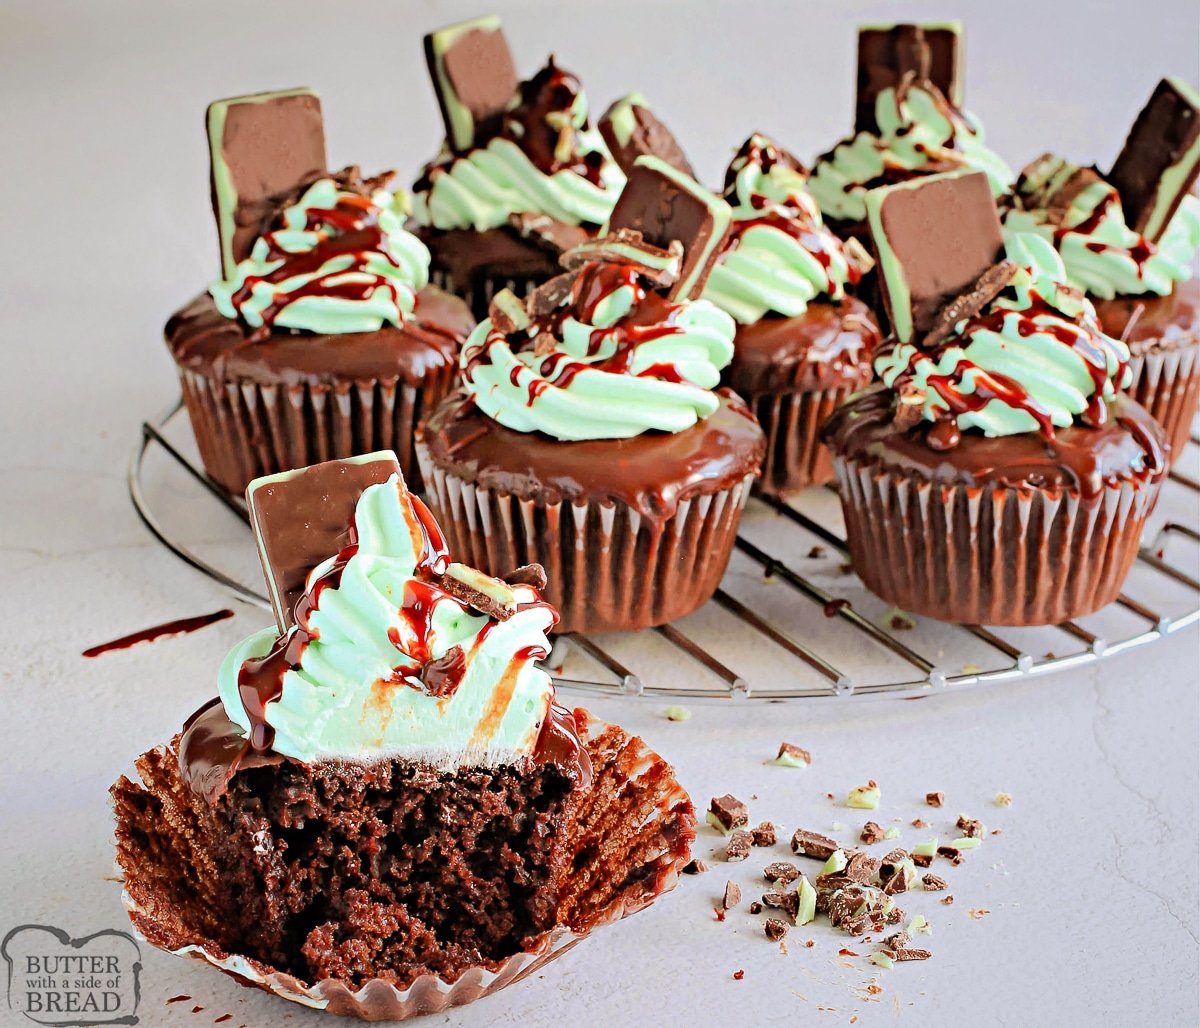 bite into a mint chocolate cupcake